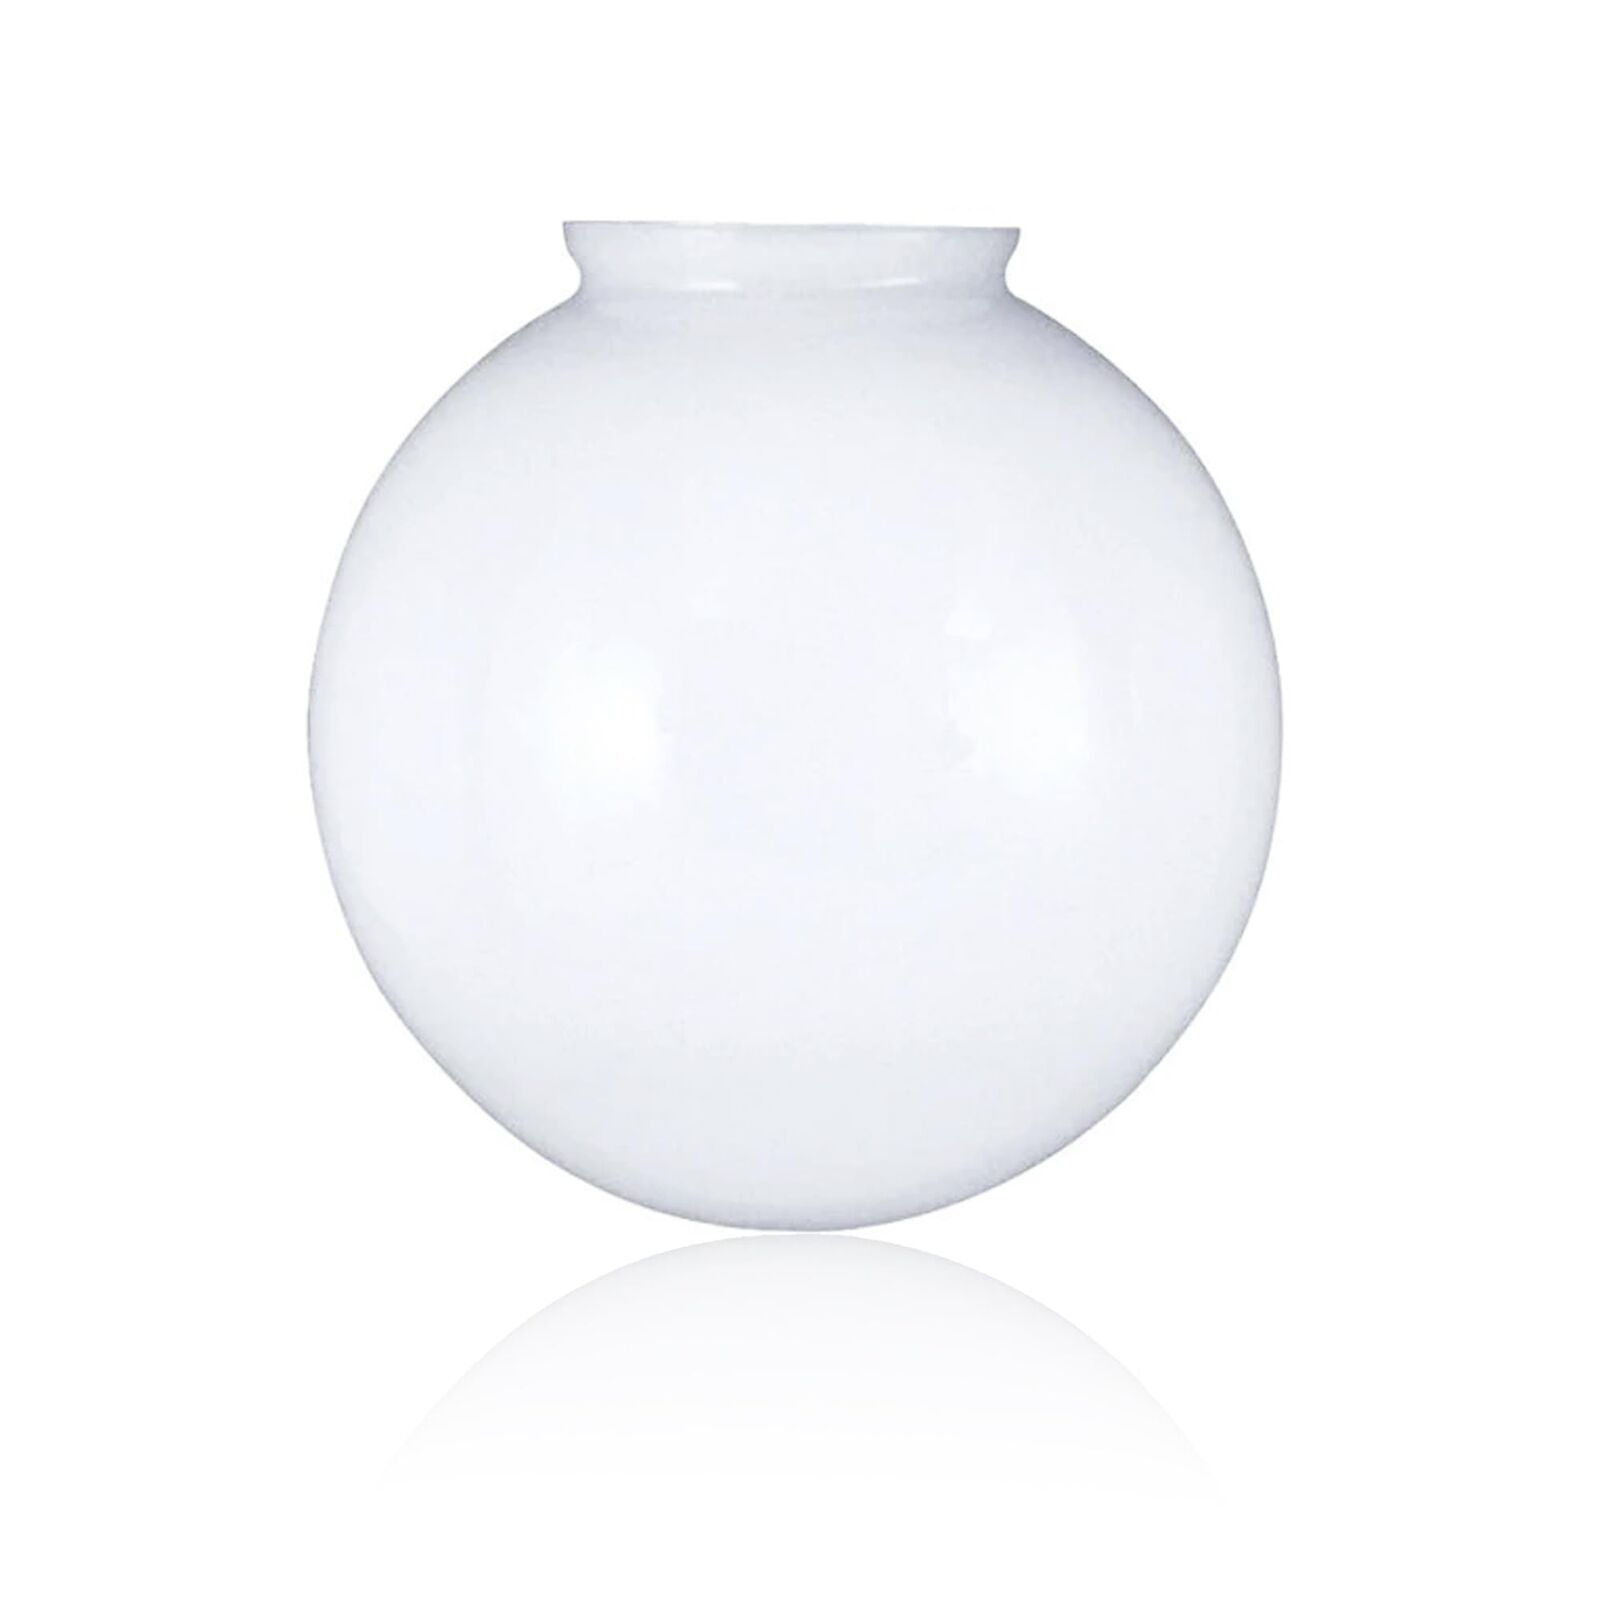 Glass Light Cover Safety Globe Guard for Kitchen Hood Light Bulb Cover Vaporp...